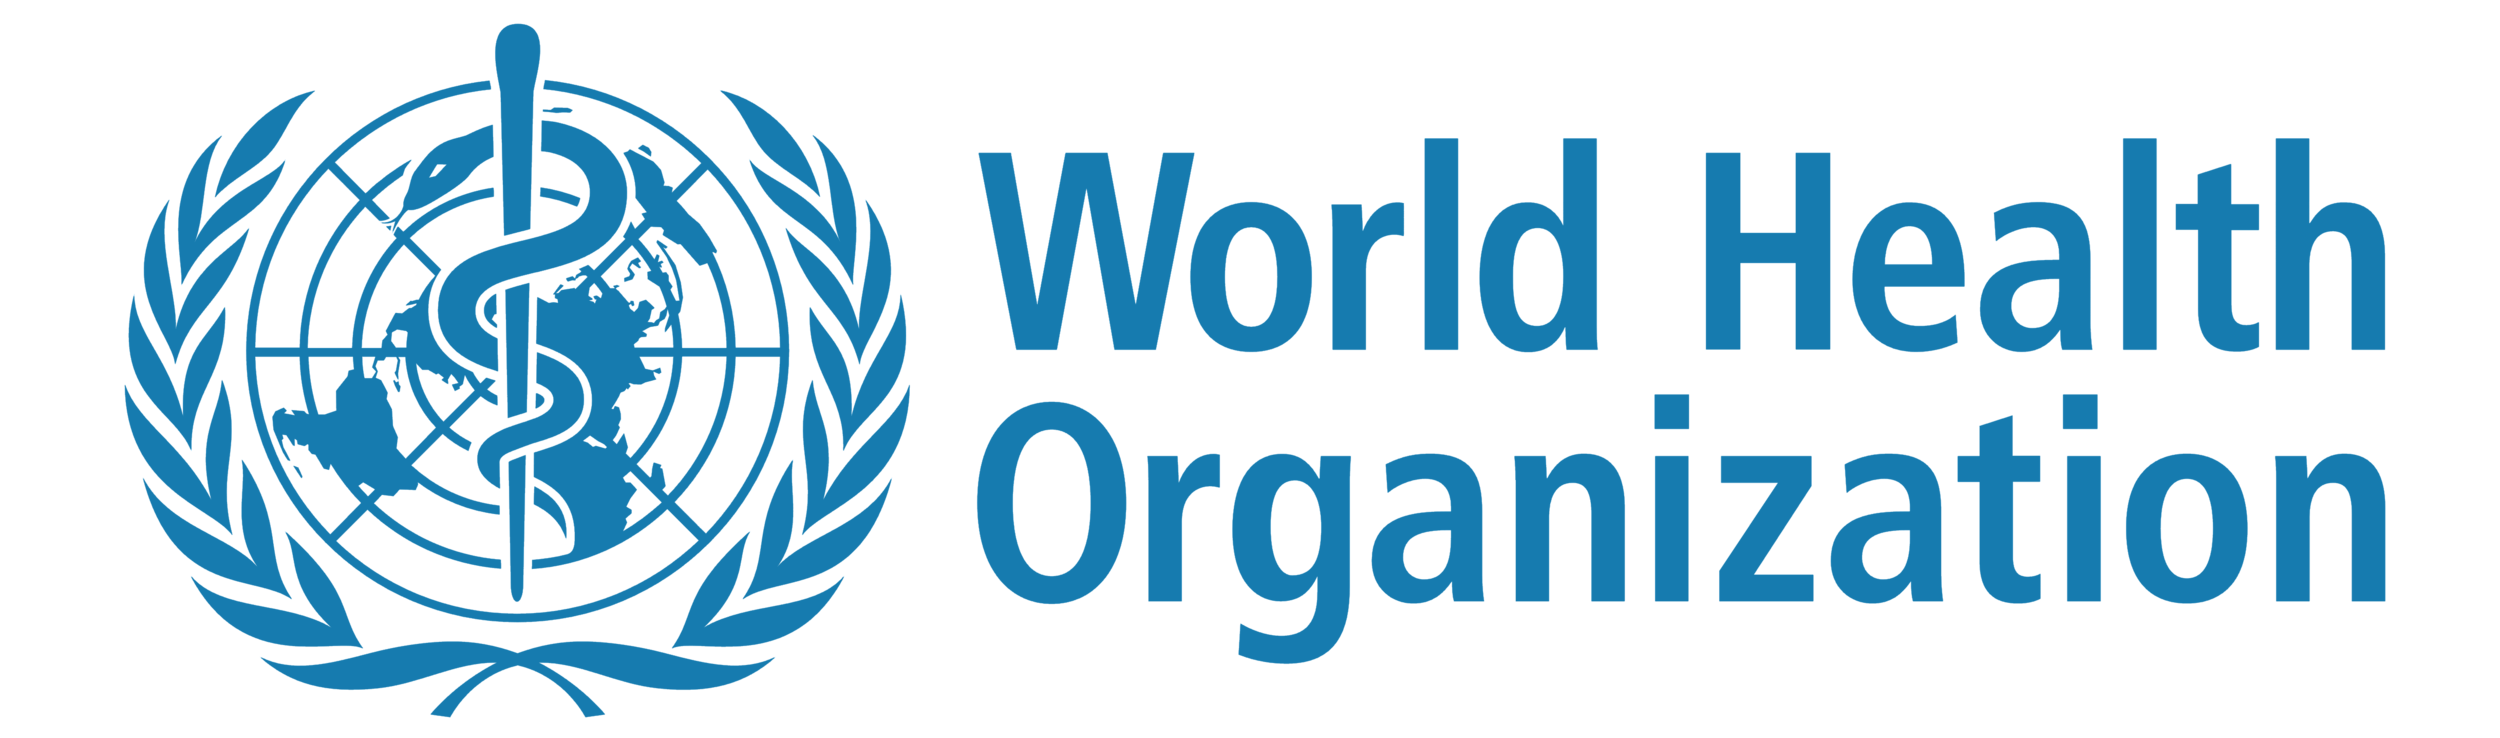 World_Health_Organization_logo_logotype.png